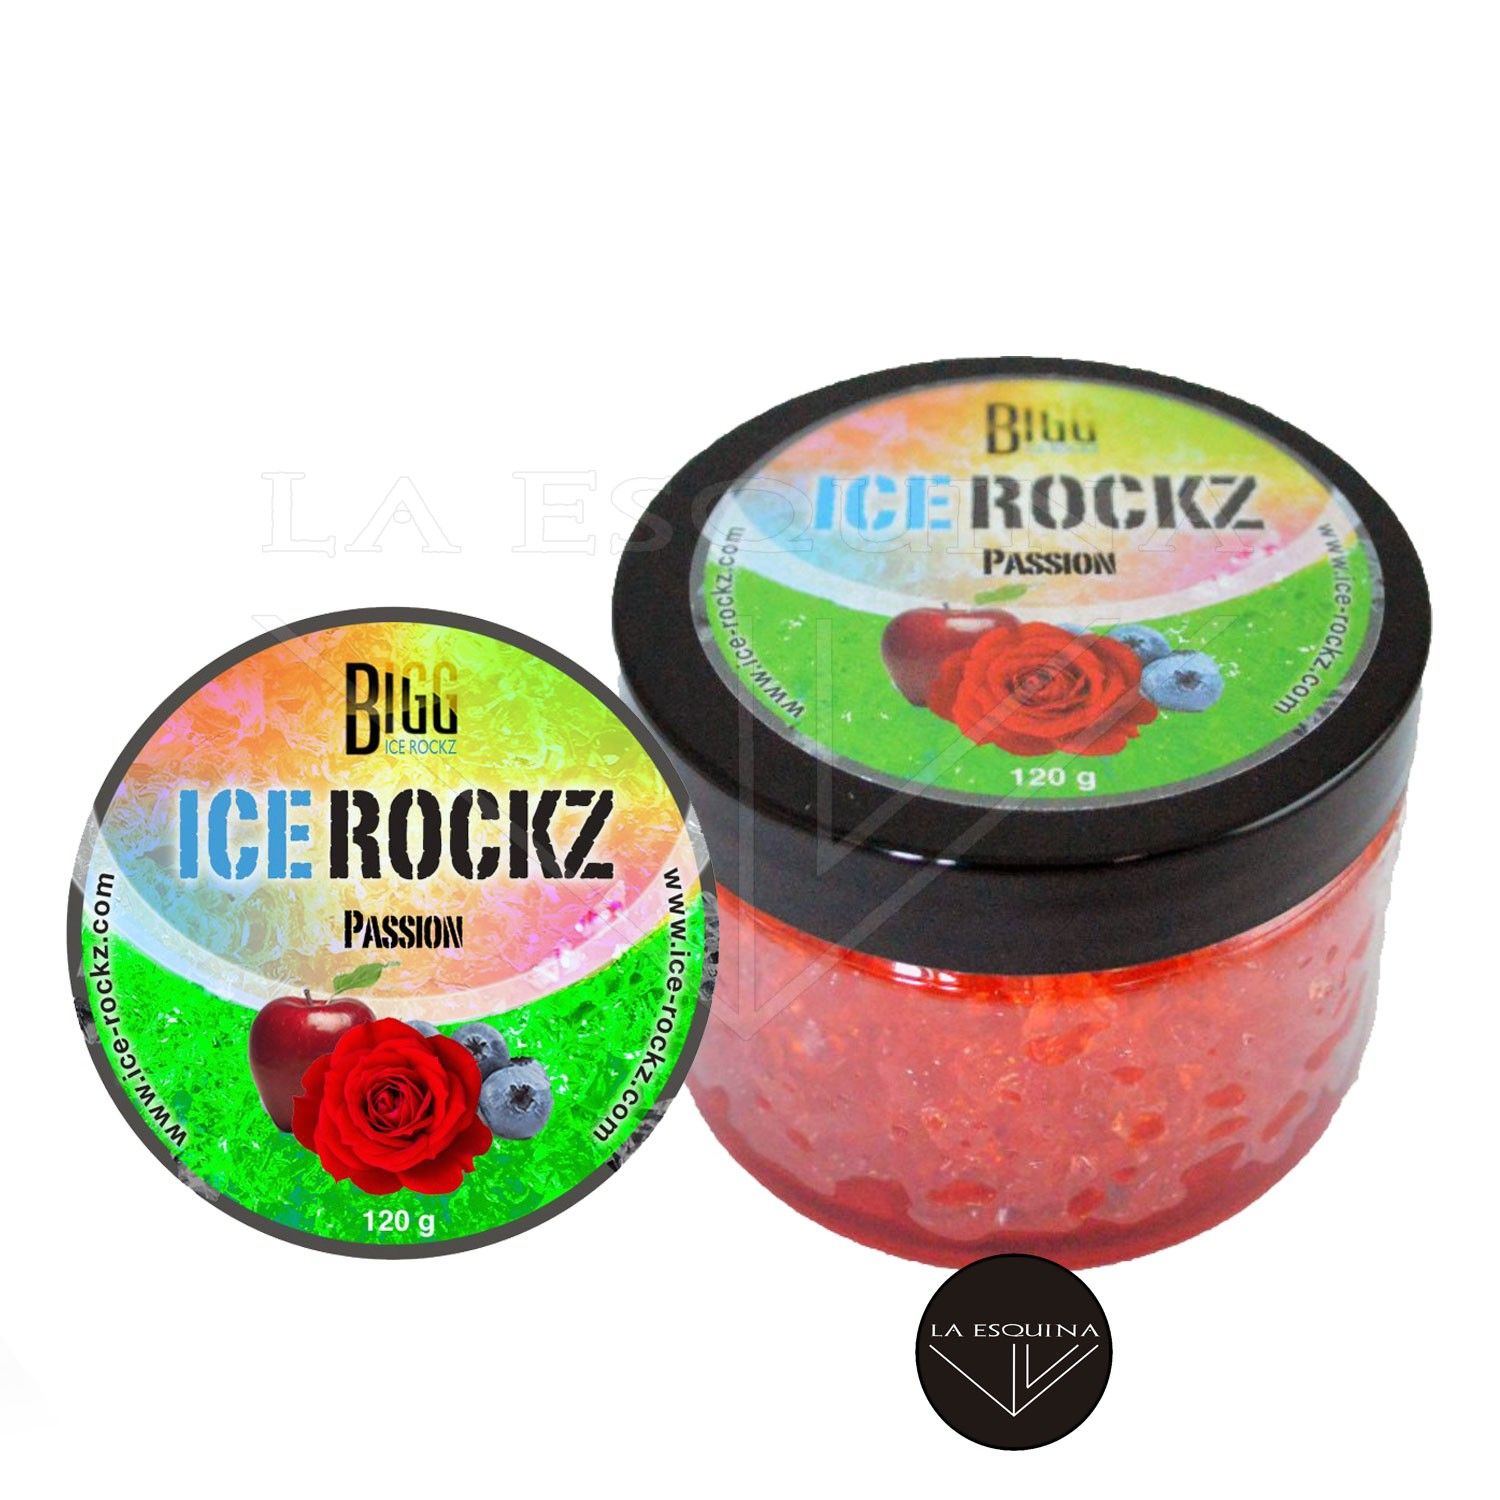 Gel Rock de Cachimba BIGG ICE ROCKZ – 120 g. – Passion